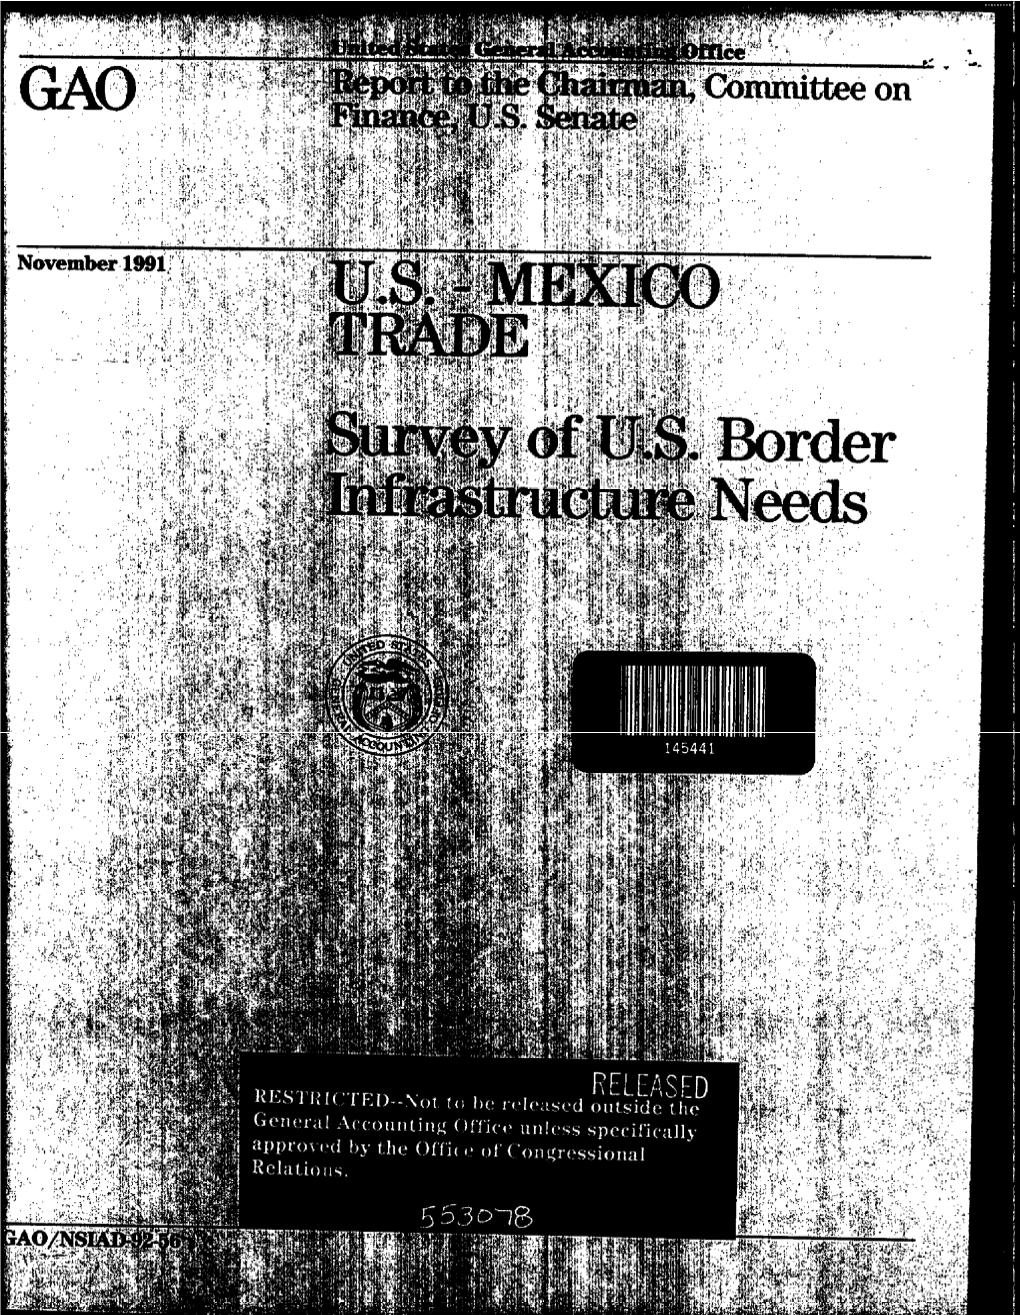 NSIAD-92-56 U.S.-Mexico Trade: Survey of U.S. Border Infrastructure Needs